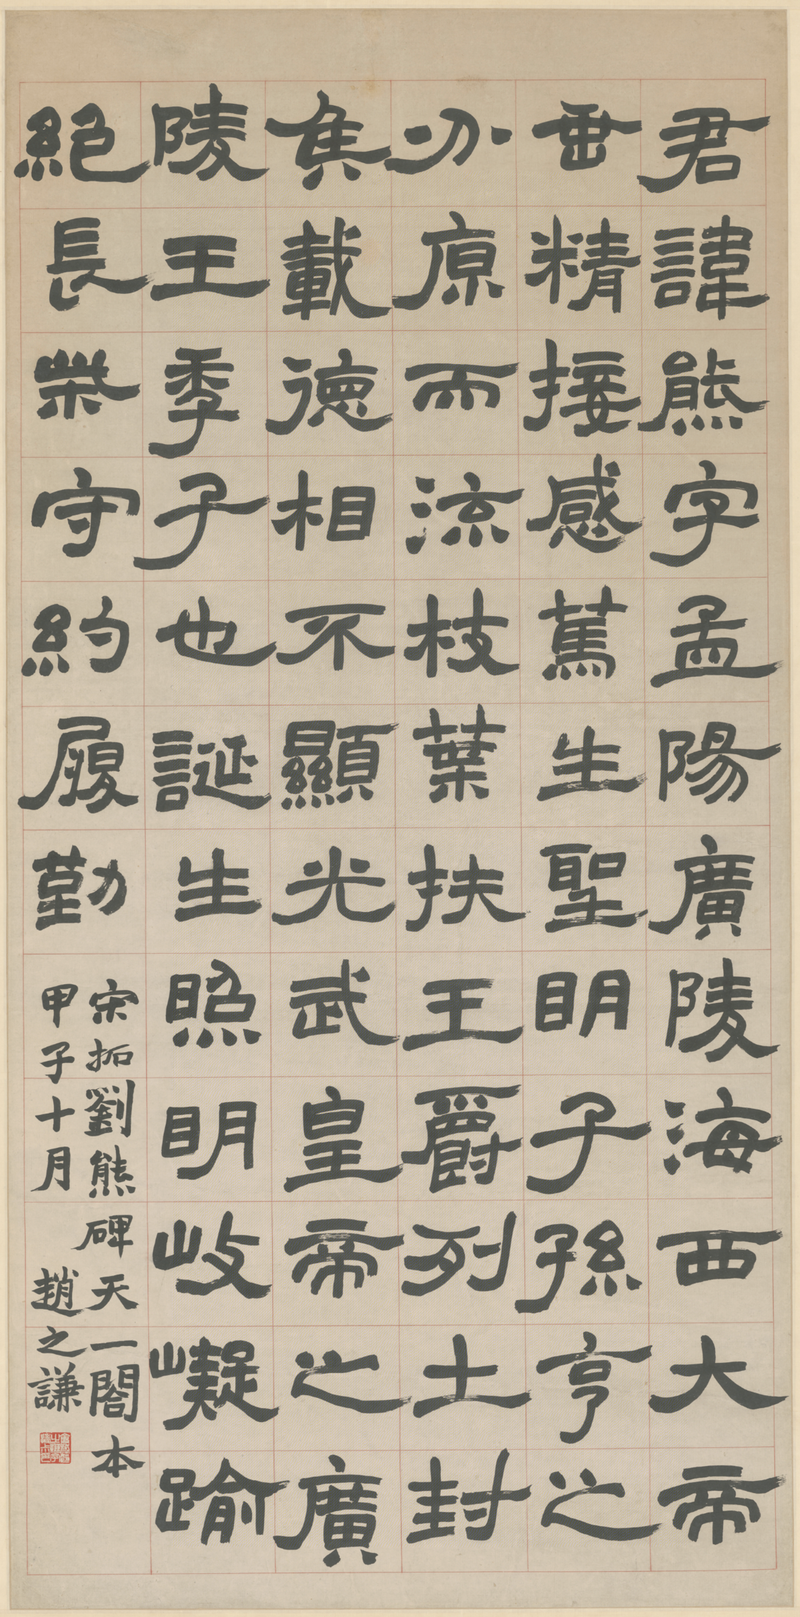 File:赵之谦隶书四条屏.png - Wikimedia Commons